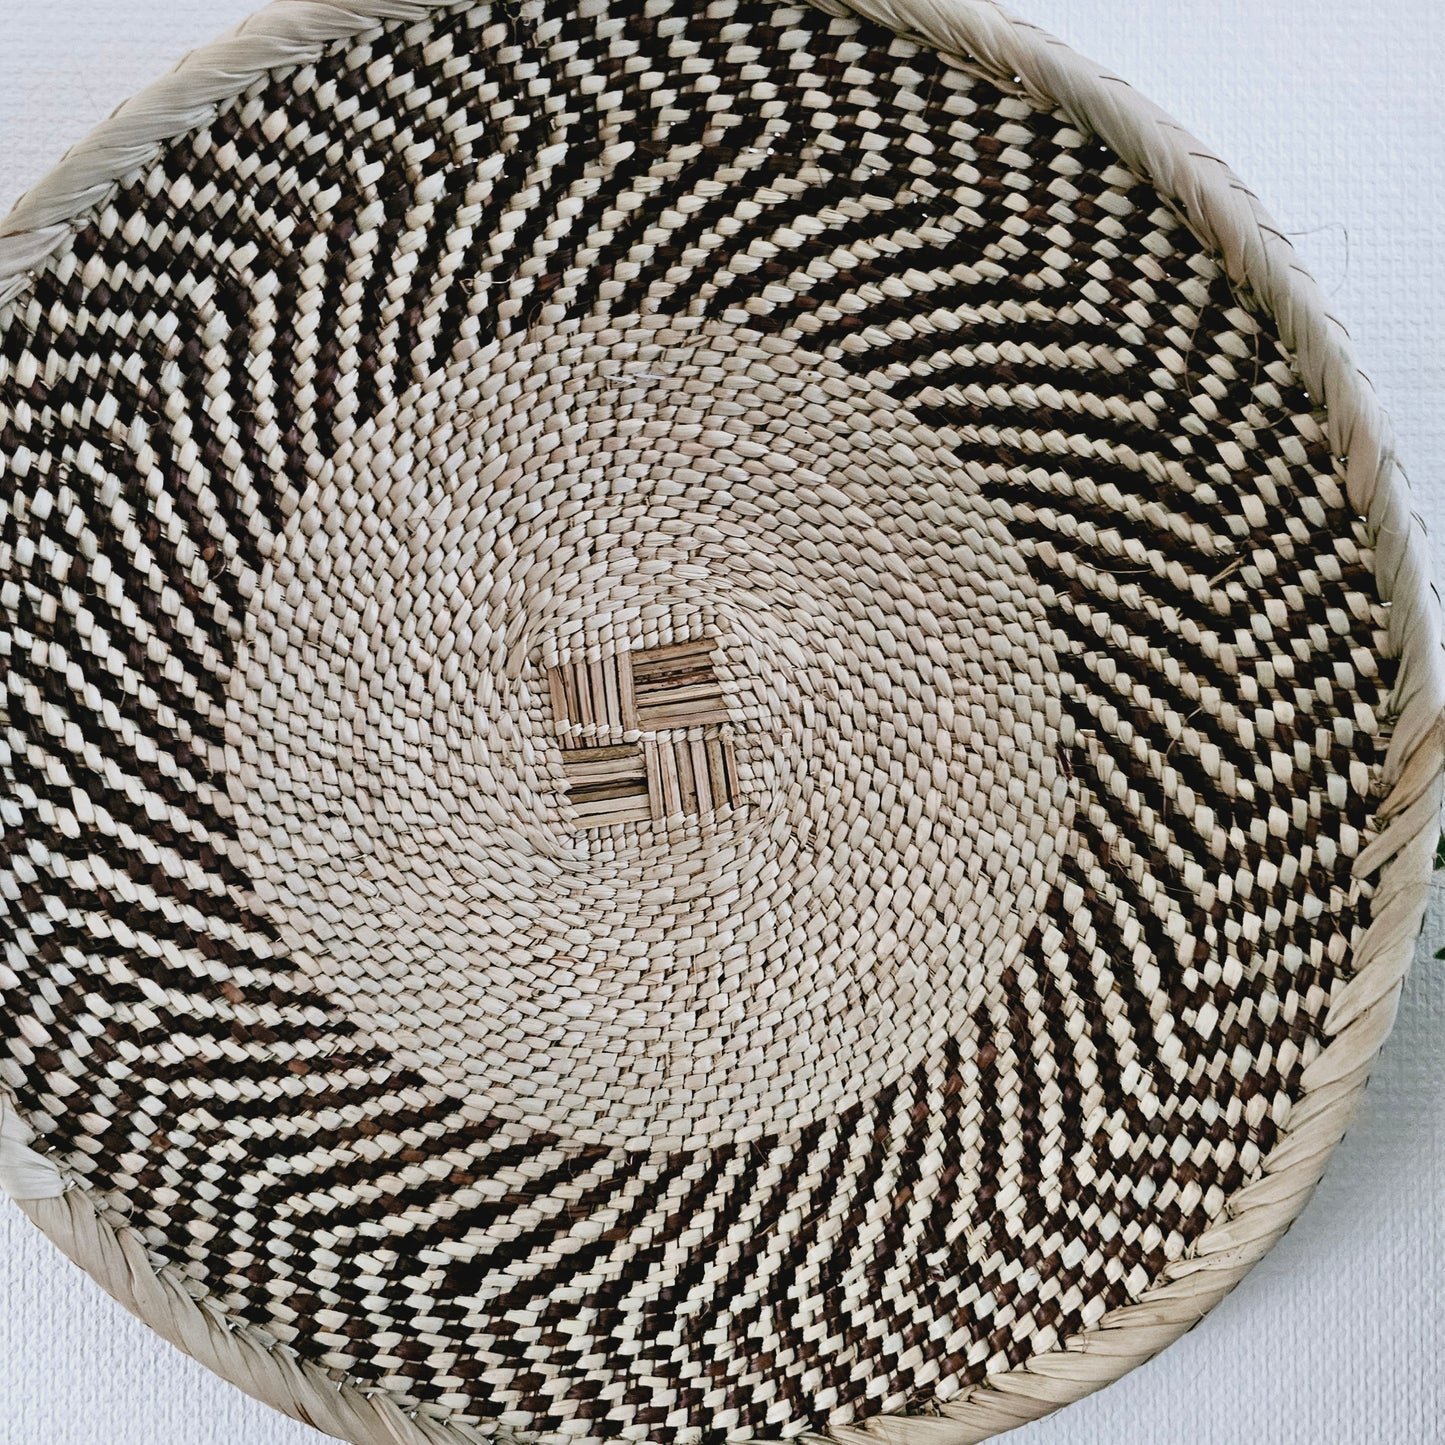 Set of 2 Handmade African Wall Baskets | Zimbabwe Baskets | Boho Wall Decor